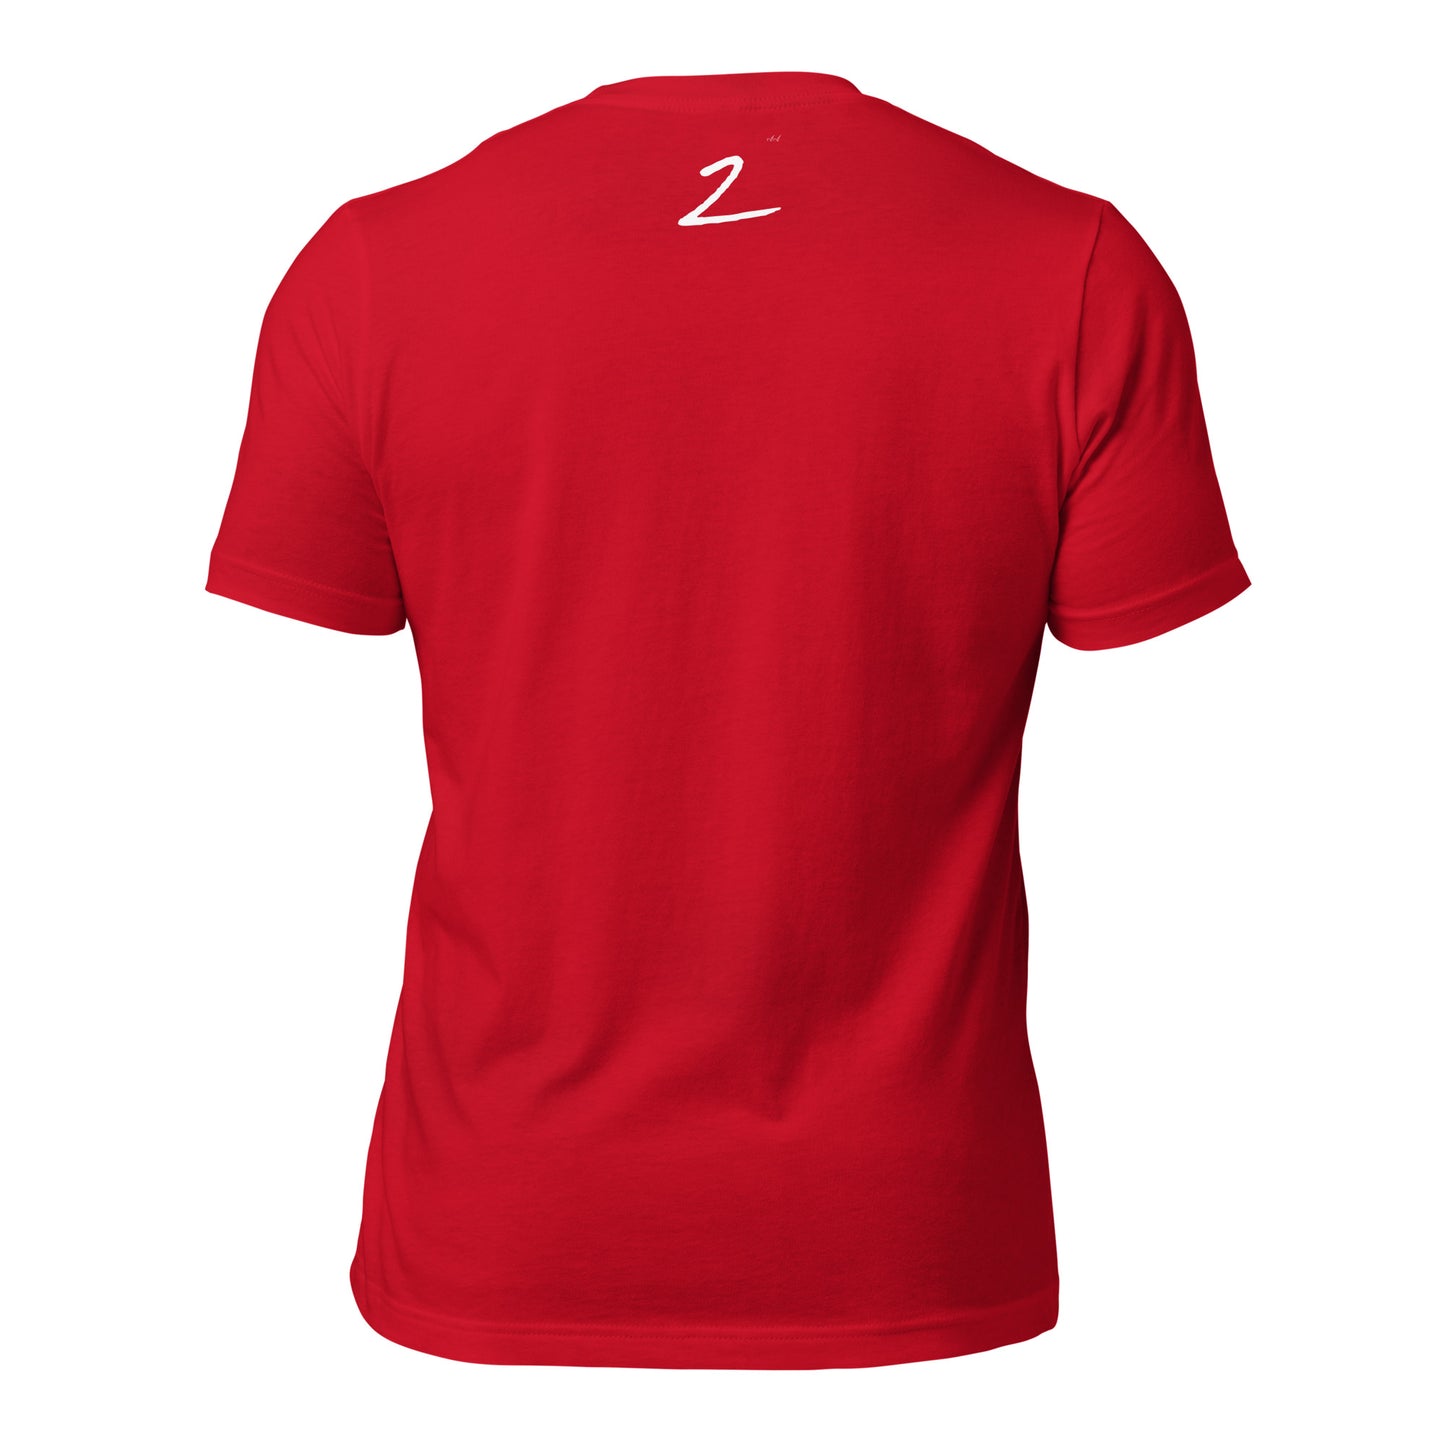 2 Numeral Unisex t-shirt